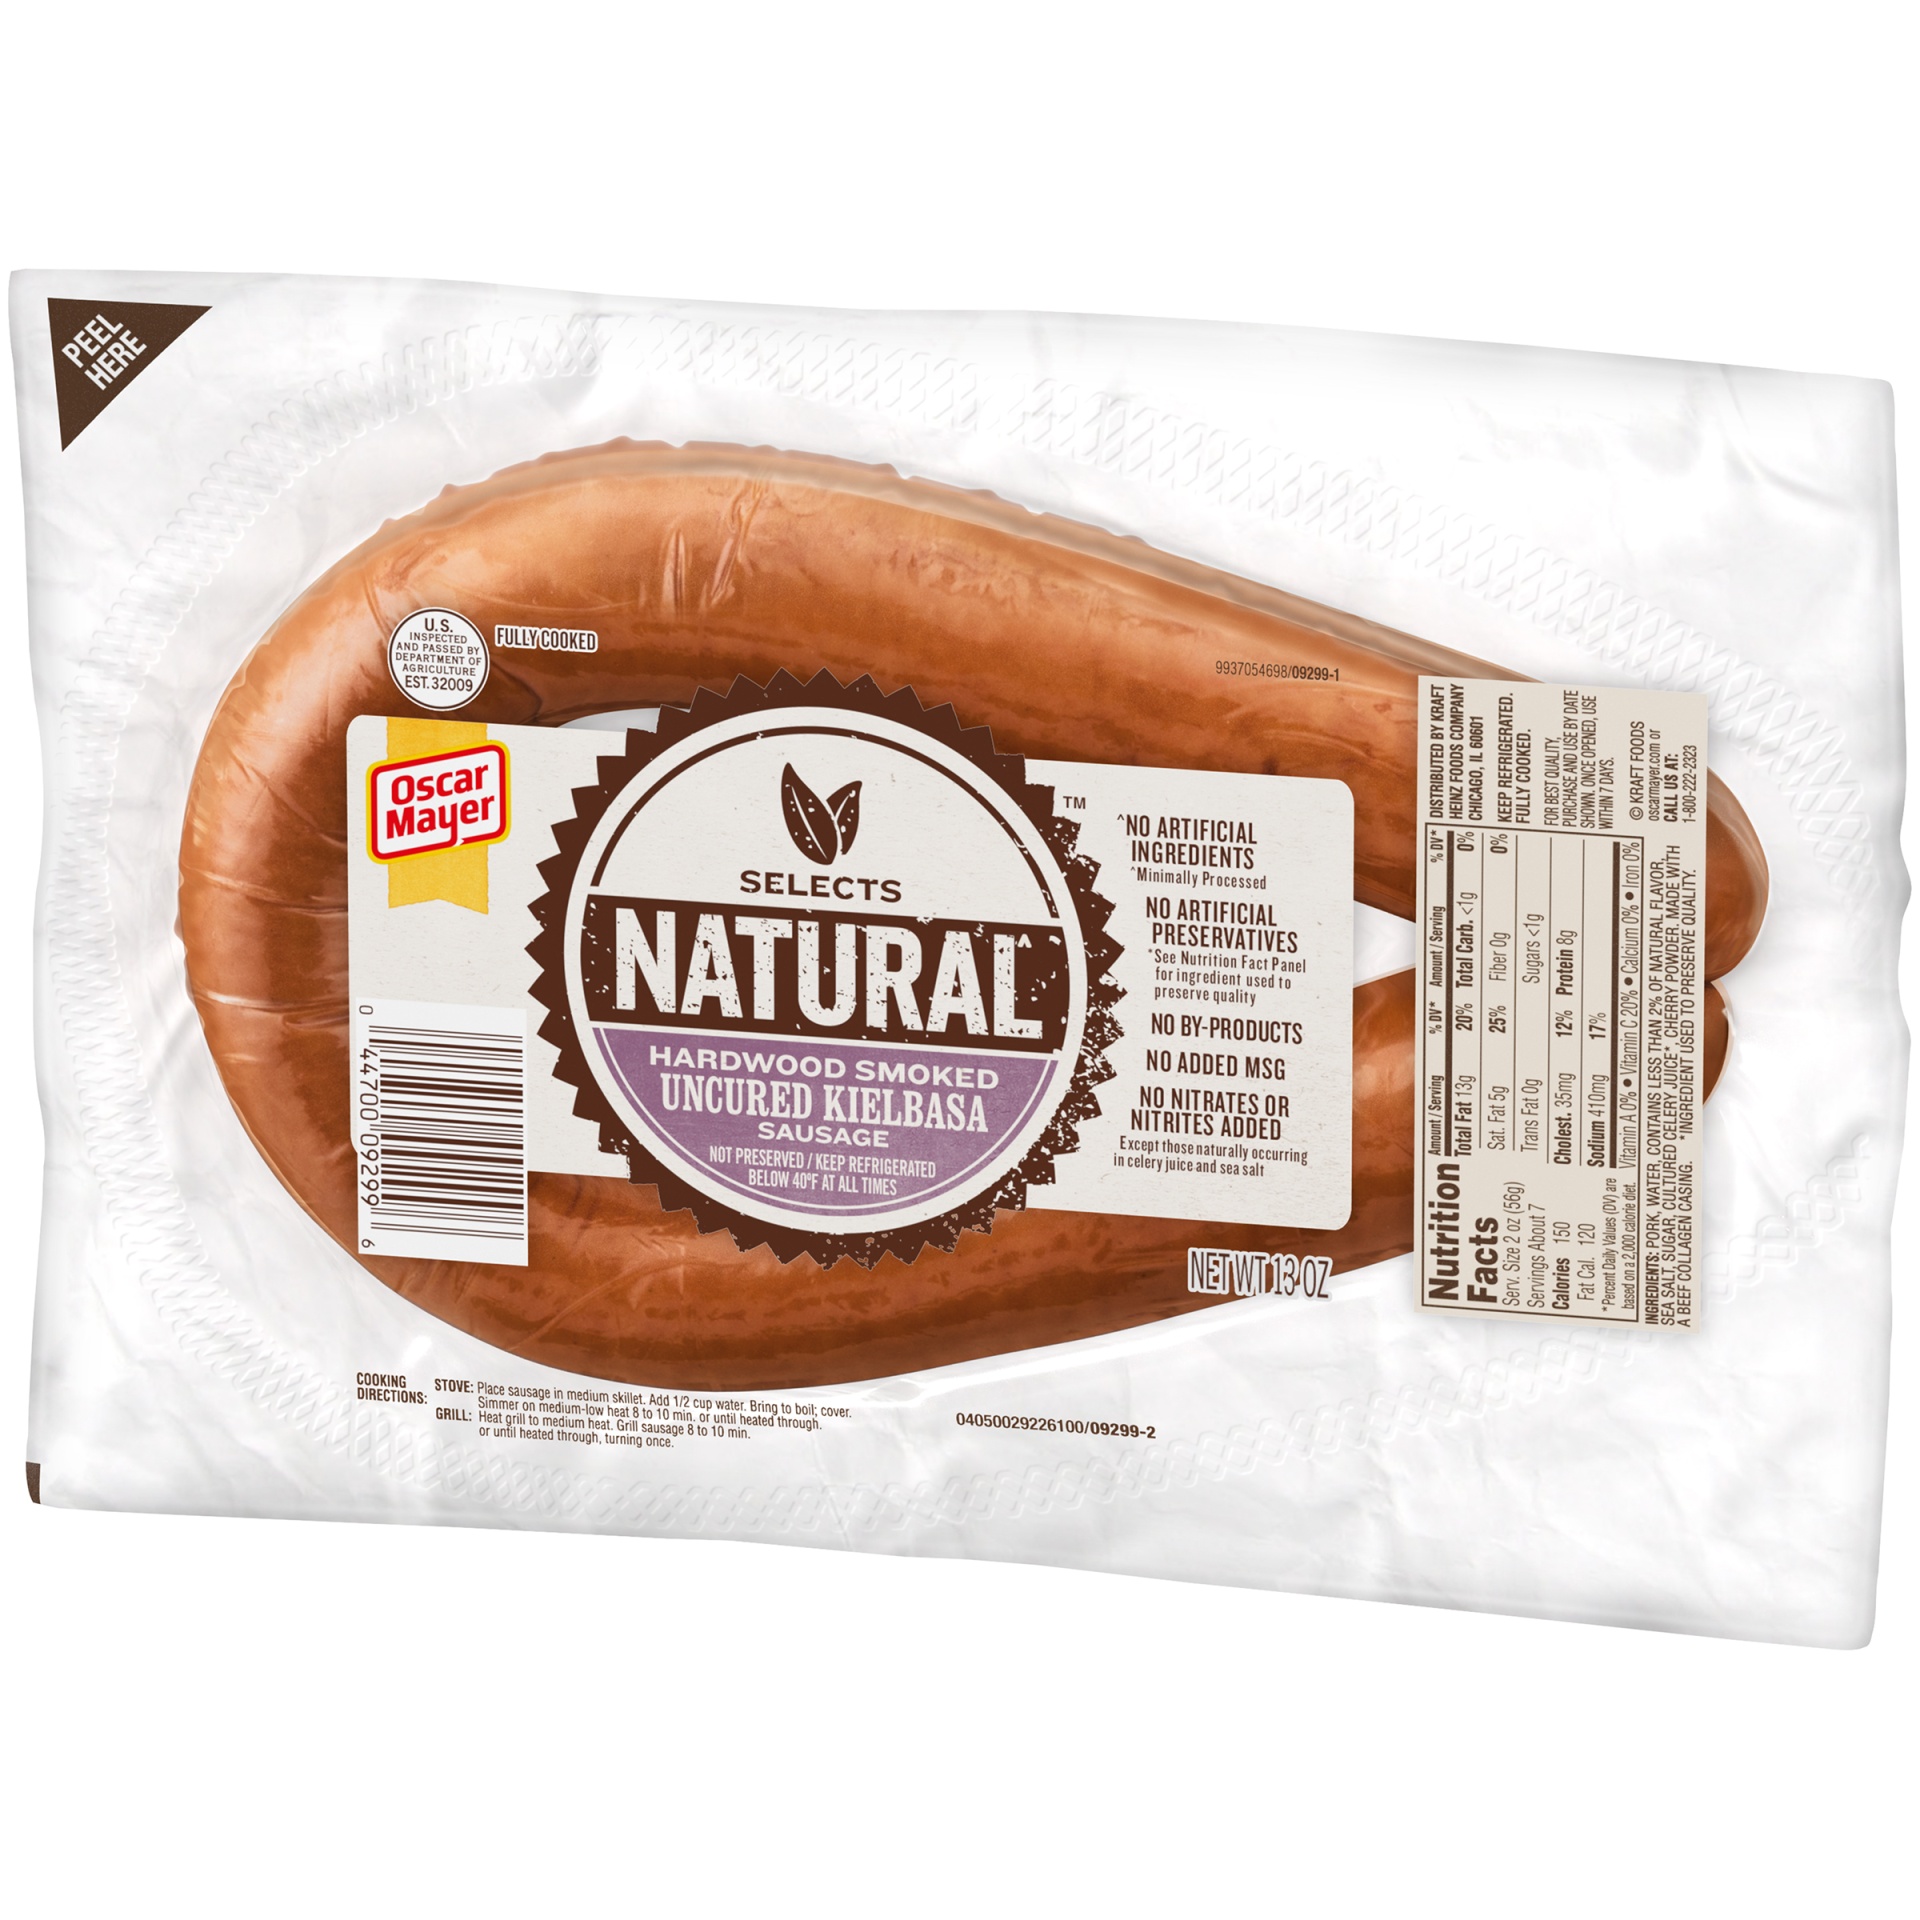 slide 2 of 6, Oscar Mayer Natural Selects Hardwood Smoked Uncured Kielbasa Sausage Pack, 13 oz